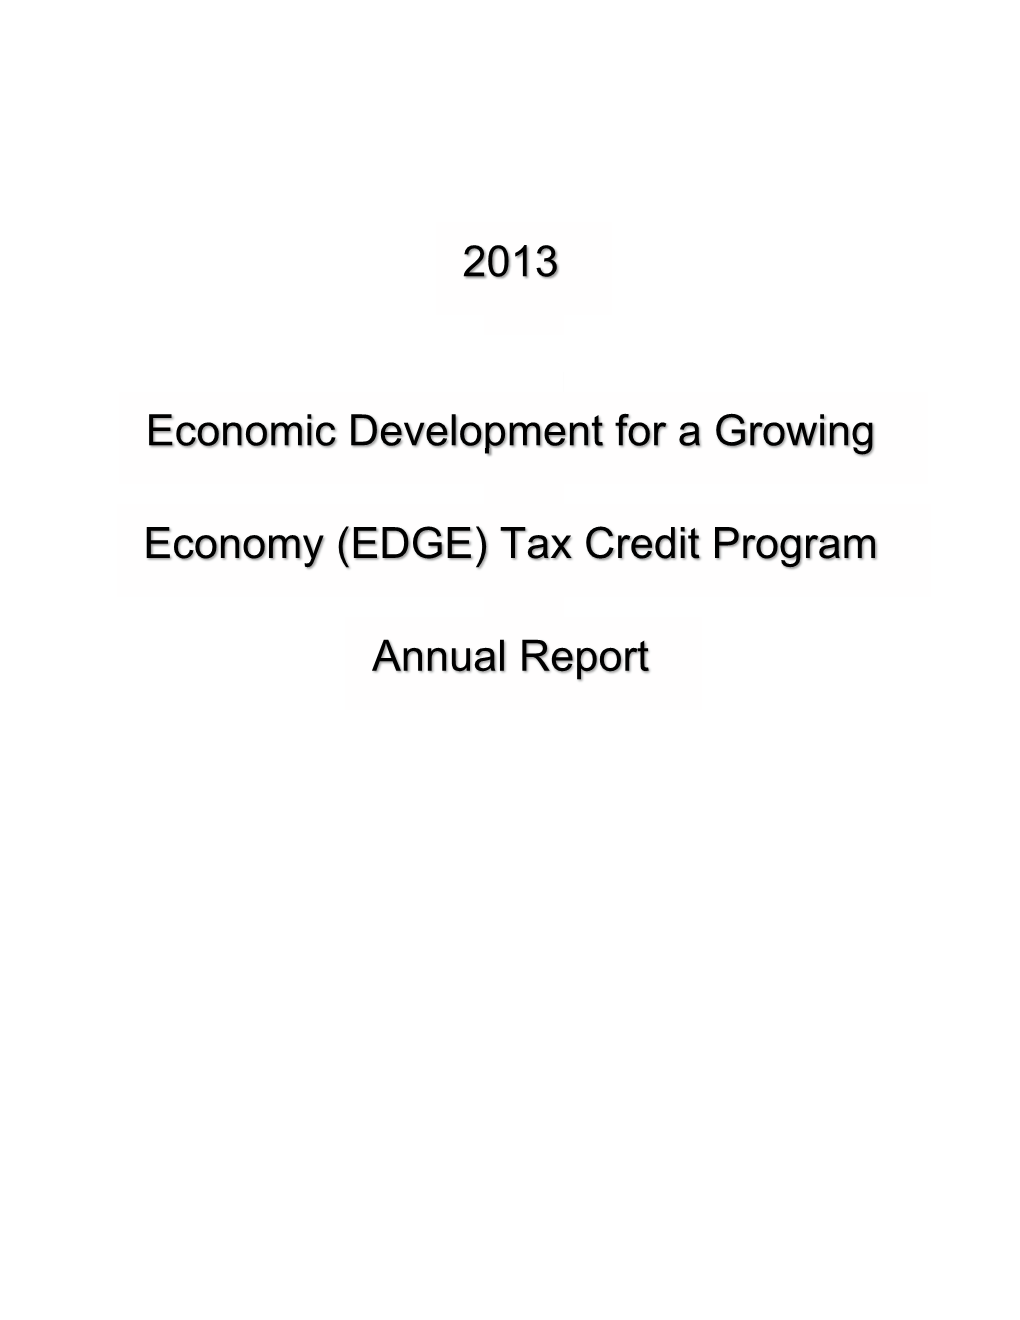 2013 Economic Development for a Growing Economy (EDGE) Tax